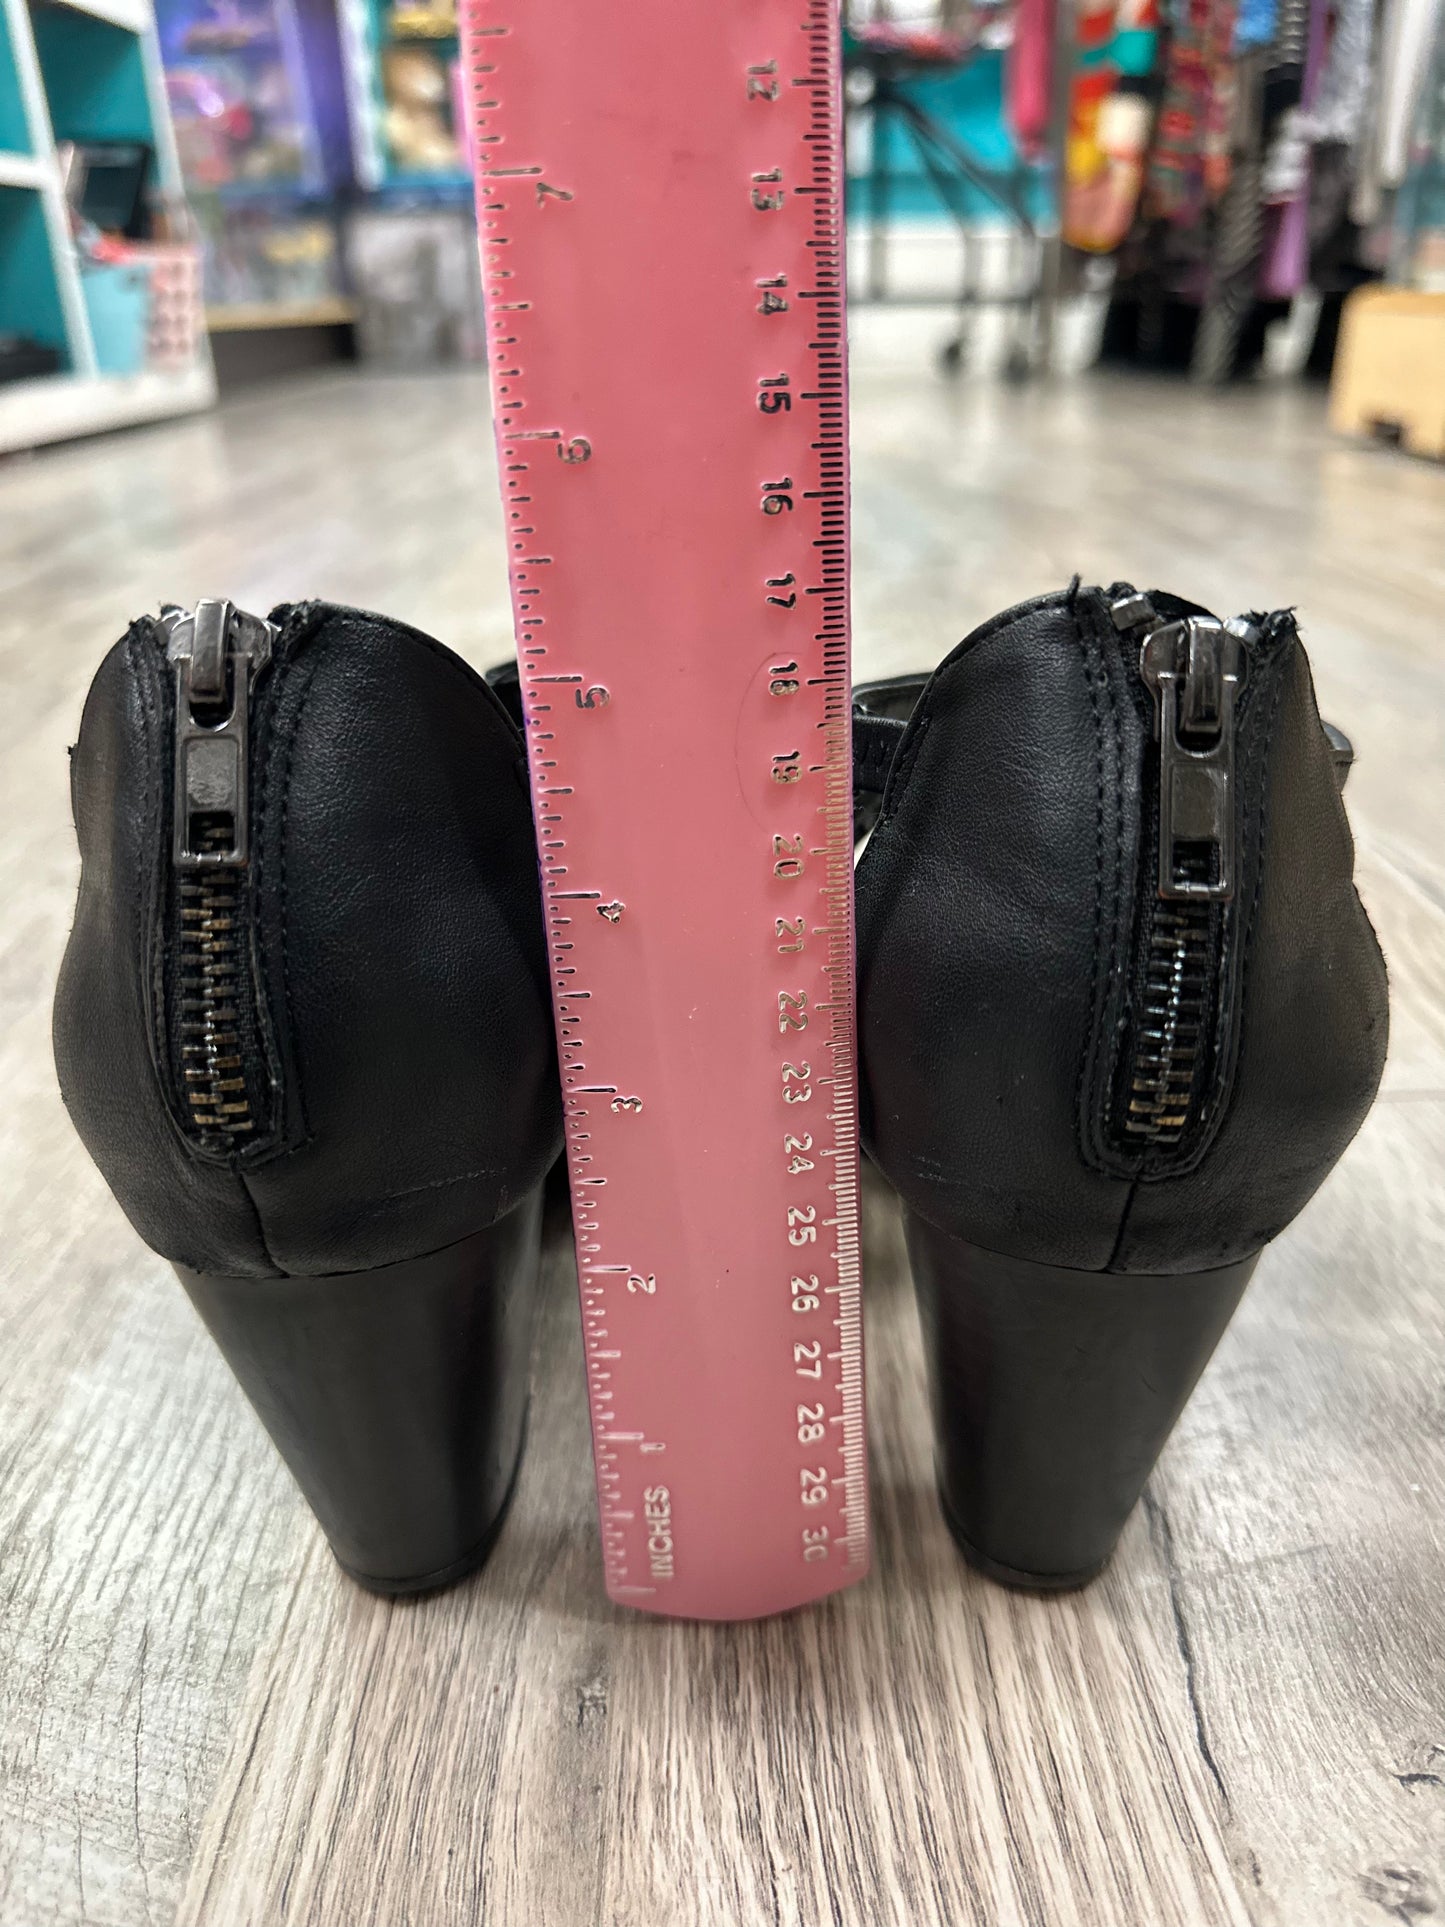 EASY STREET Womens Black Gore Amaze Open Toe Block Heel Sandals Shoes Size 7.5